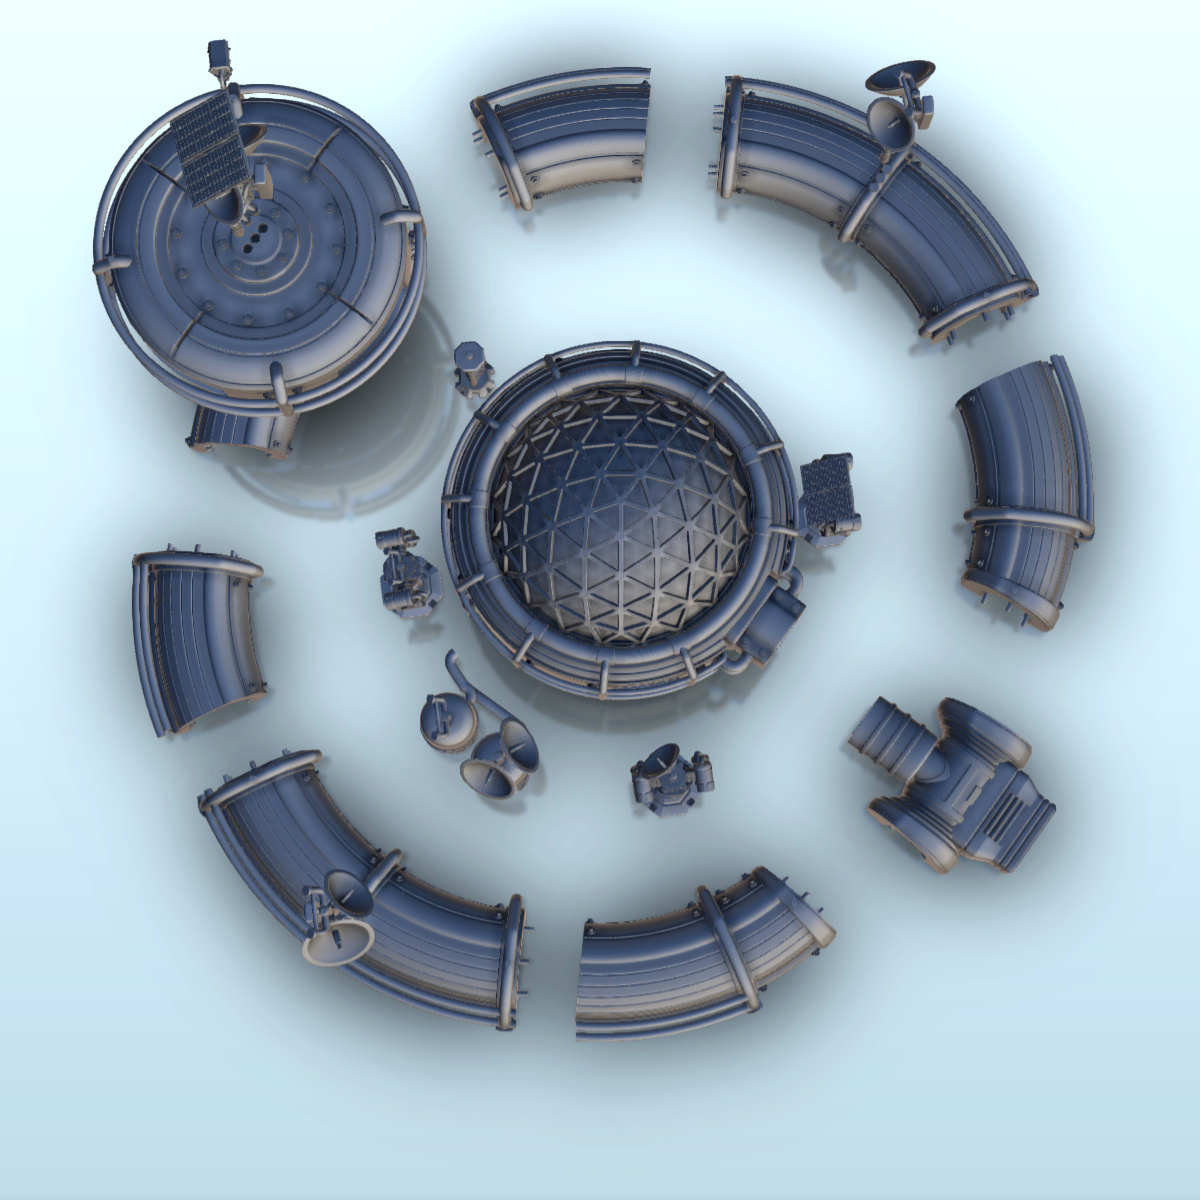 Circular base with tanks - Terrain Scifi Science fiction SF